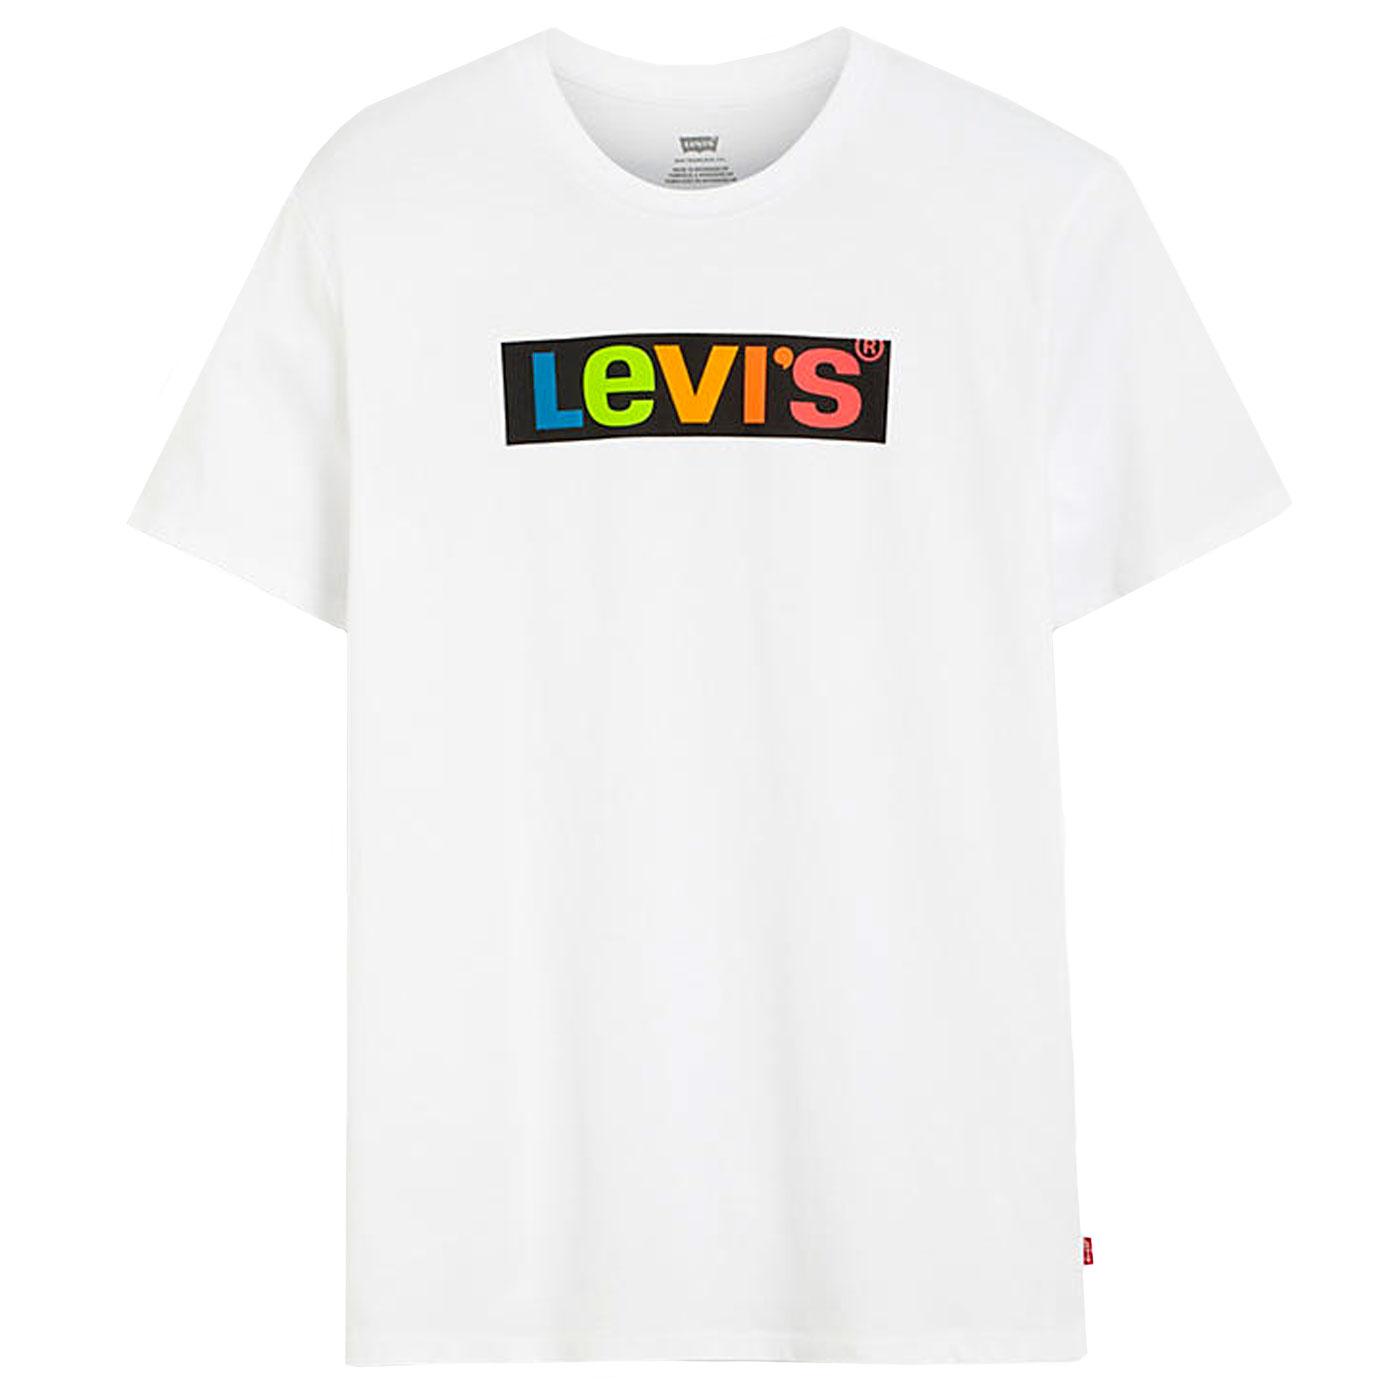 levis box logo